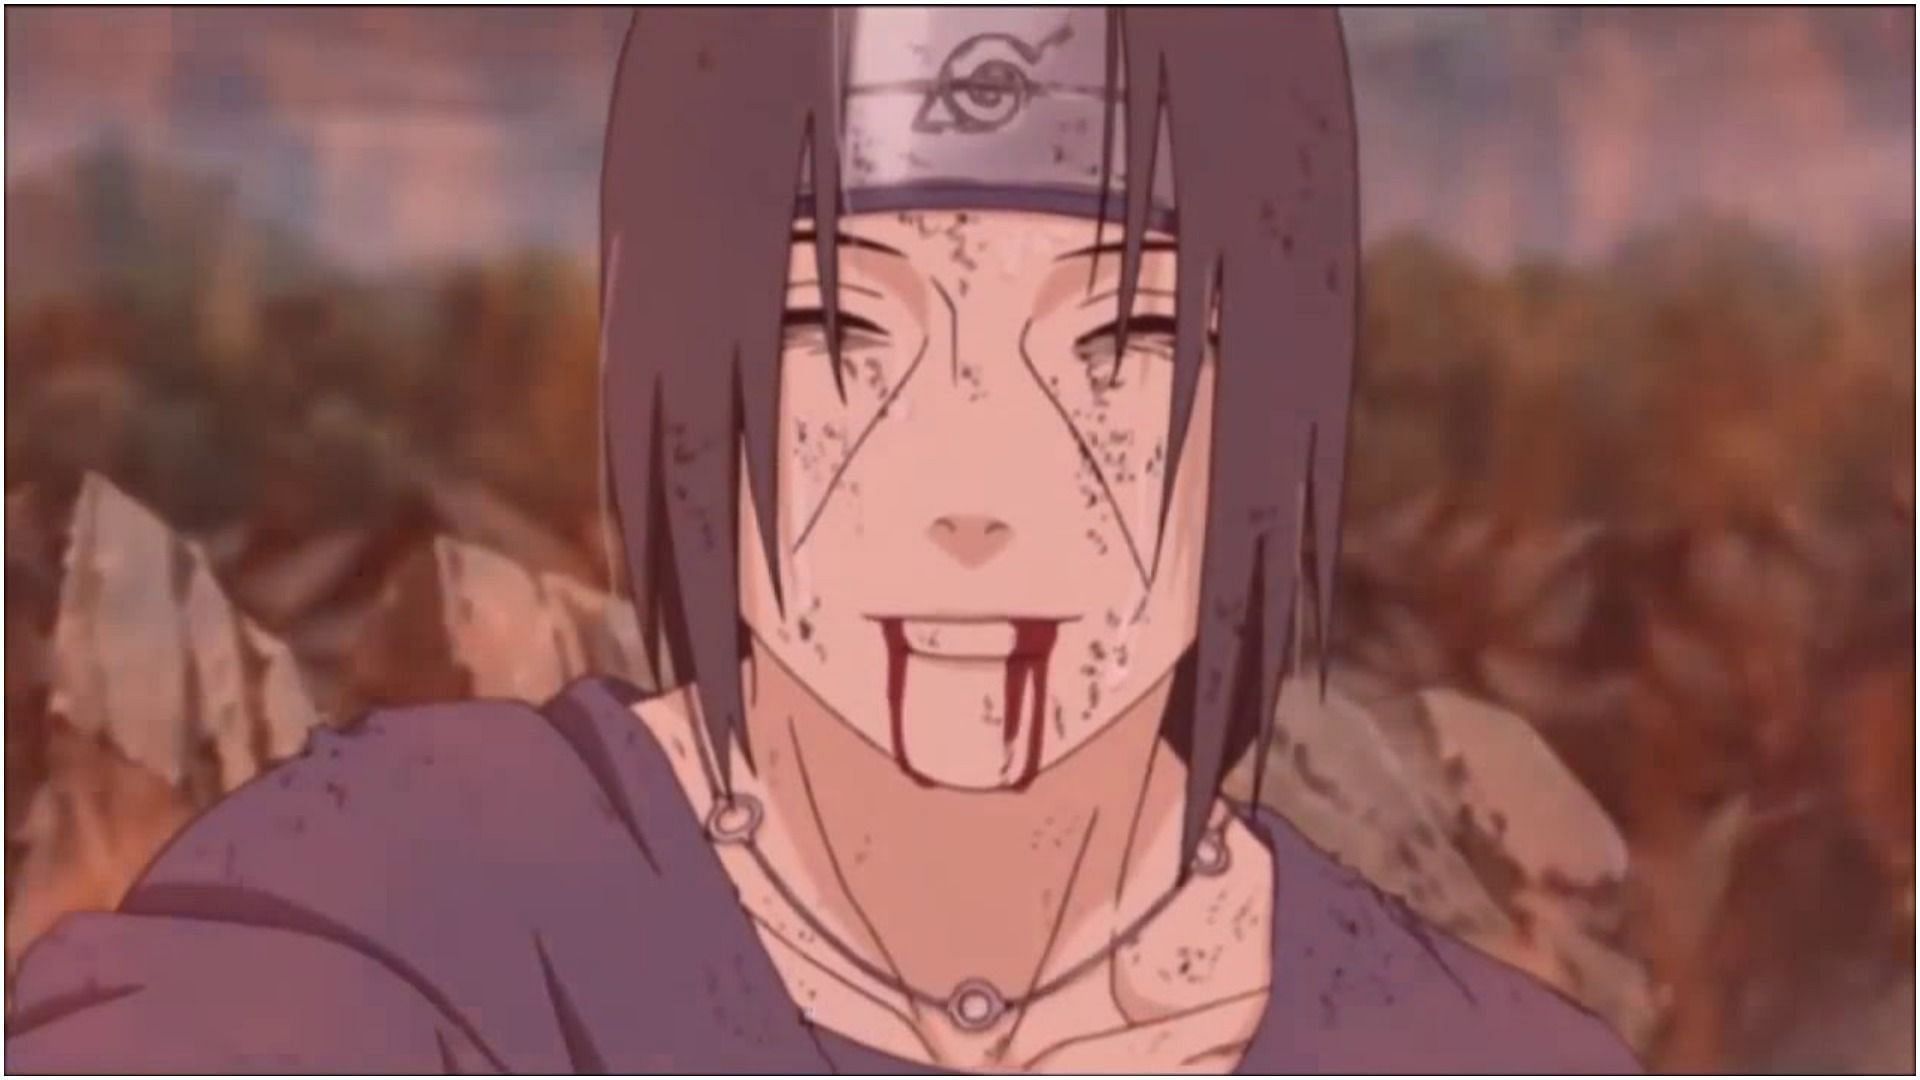 Itachi Uchiha as seen in the anime Naruto (Image via Studio Pierrot)